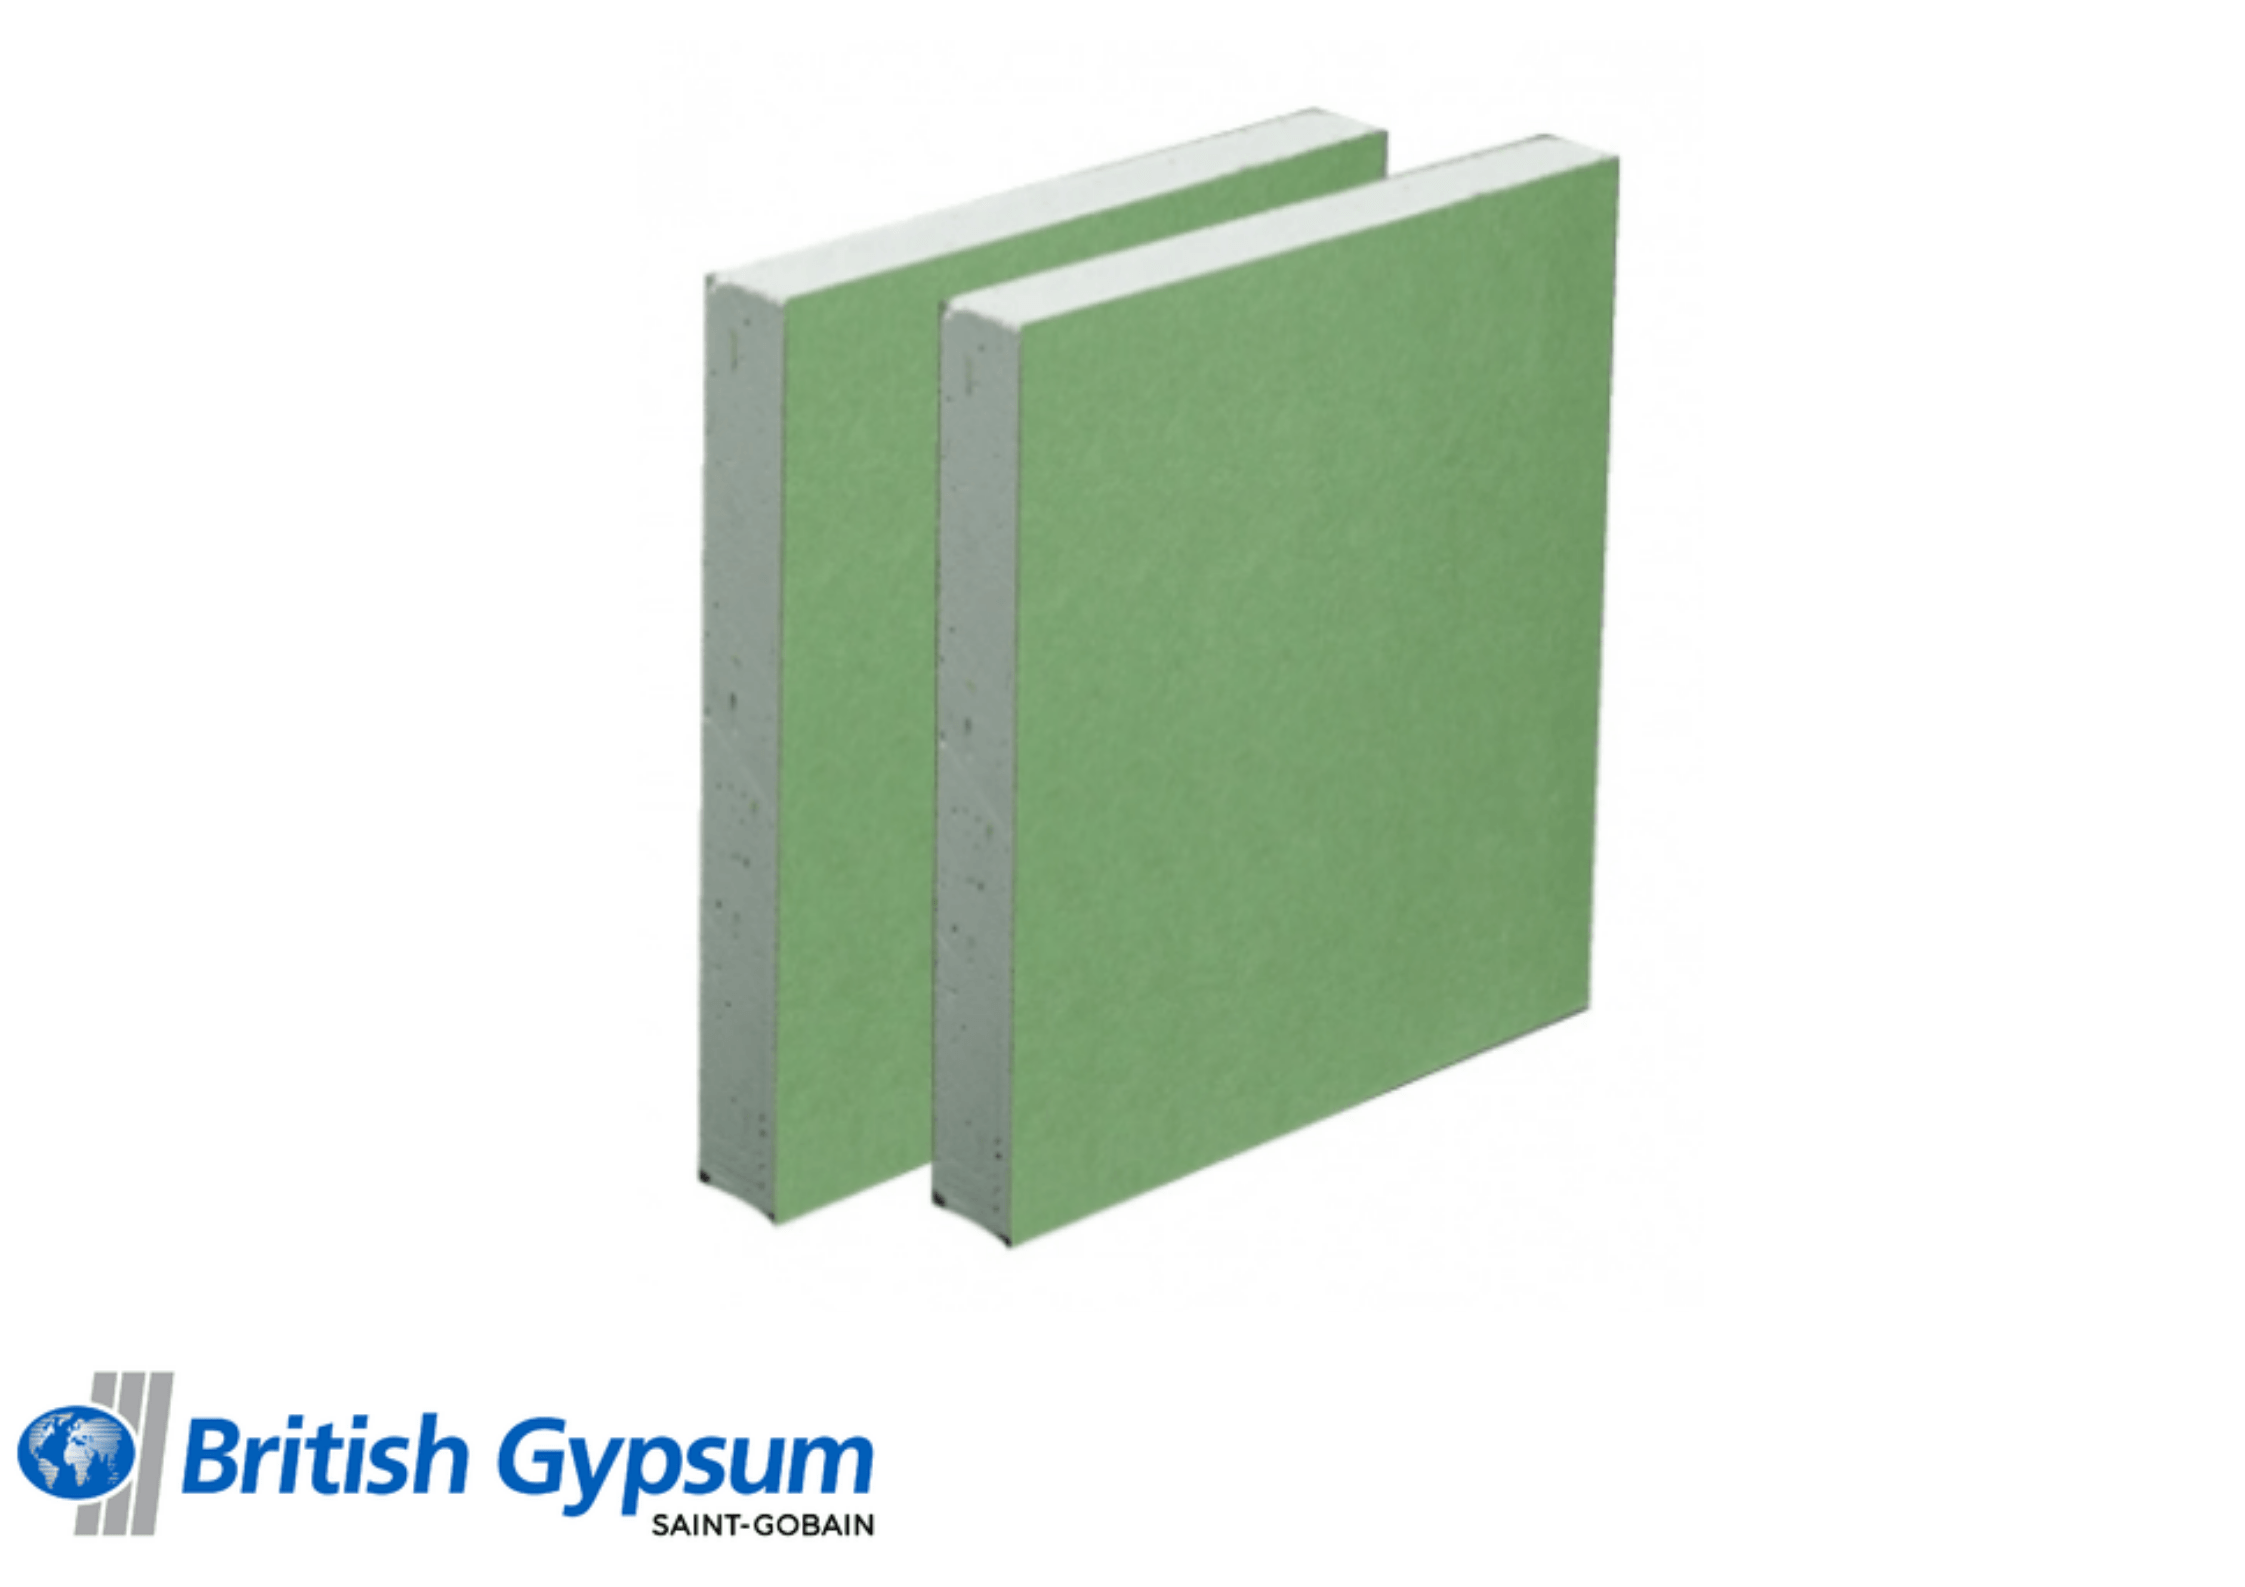 British Gypsum Drywall British Gypsum Gyproc CoreBoard 3000 x 598 x 19mm IUK01117 British Gypsum Gyproc CoreBoard 3000 x 598 x 19mm | Insulationuk.co.uk